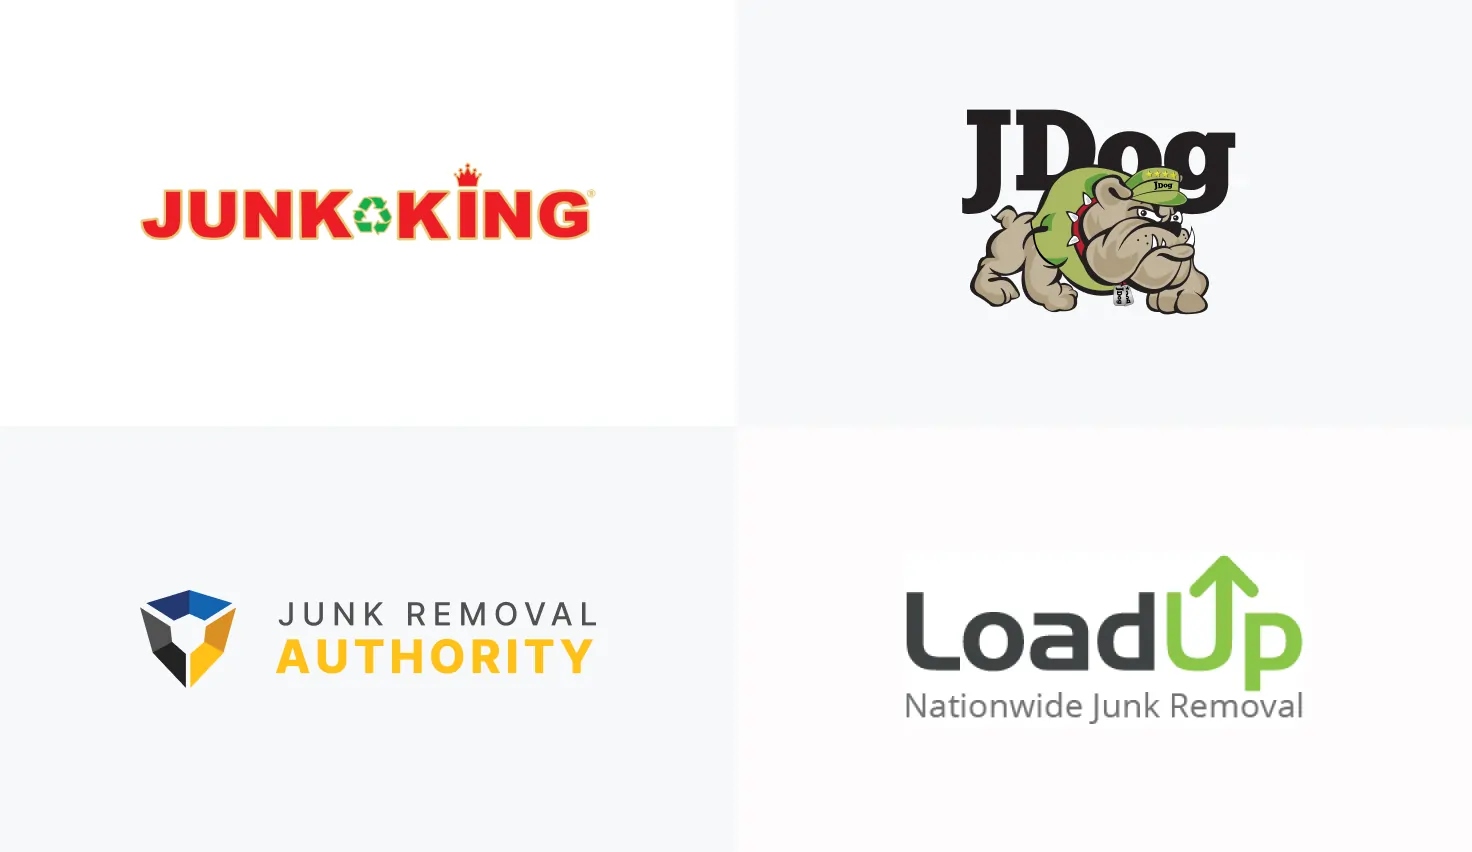 Junk Removal Companies Logos Examples